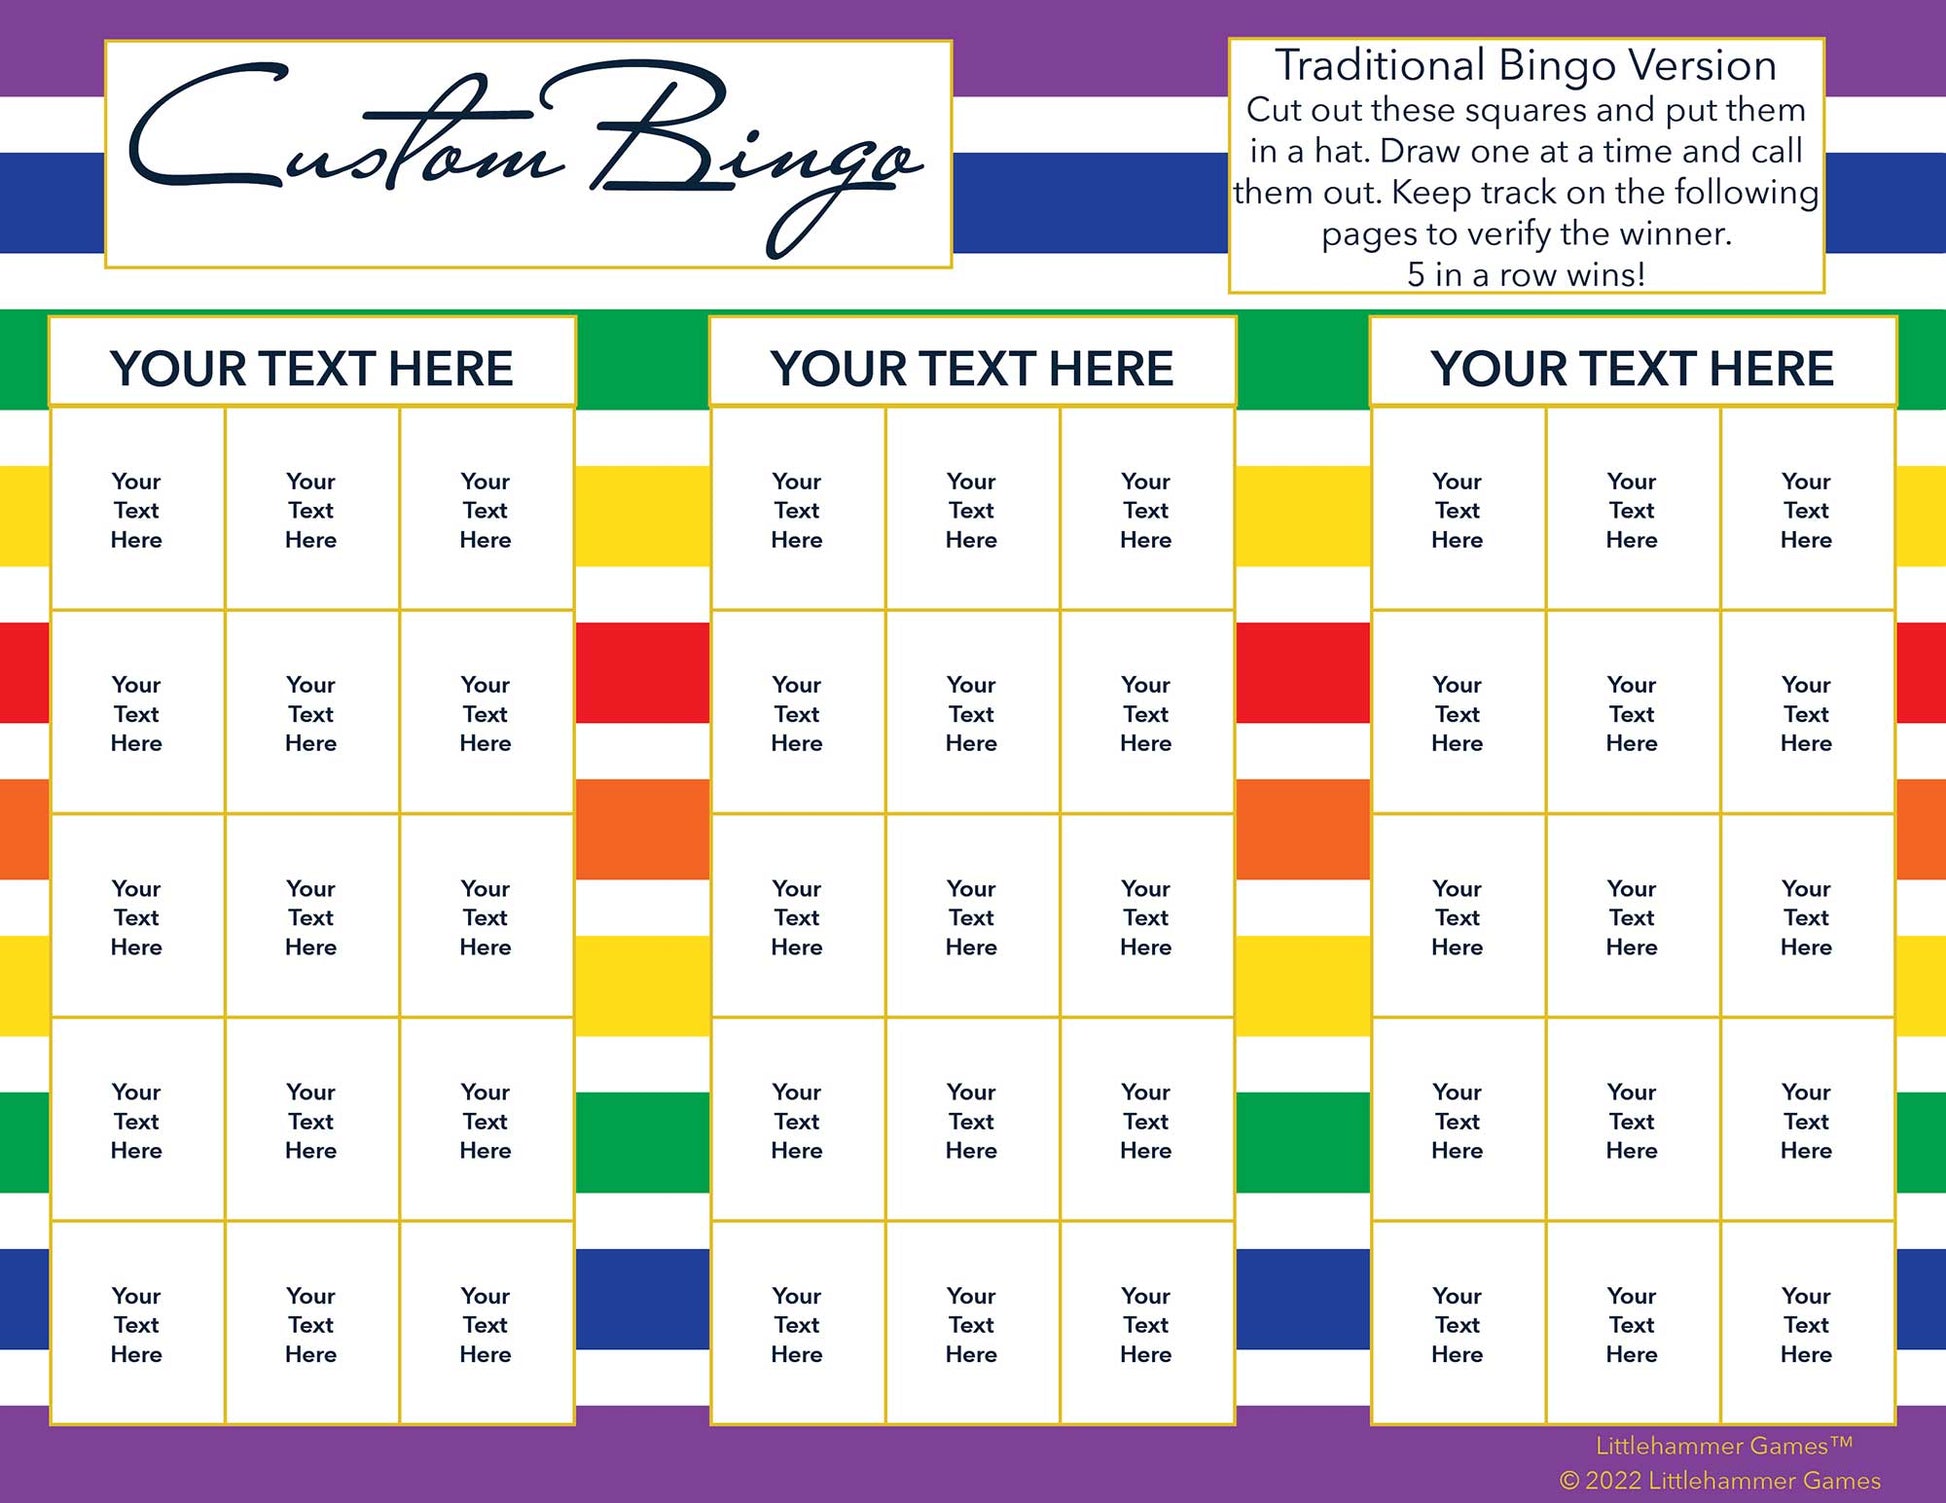 Custom Bingo calling card with a rainbow-striped background